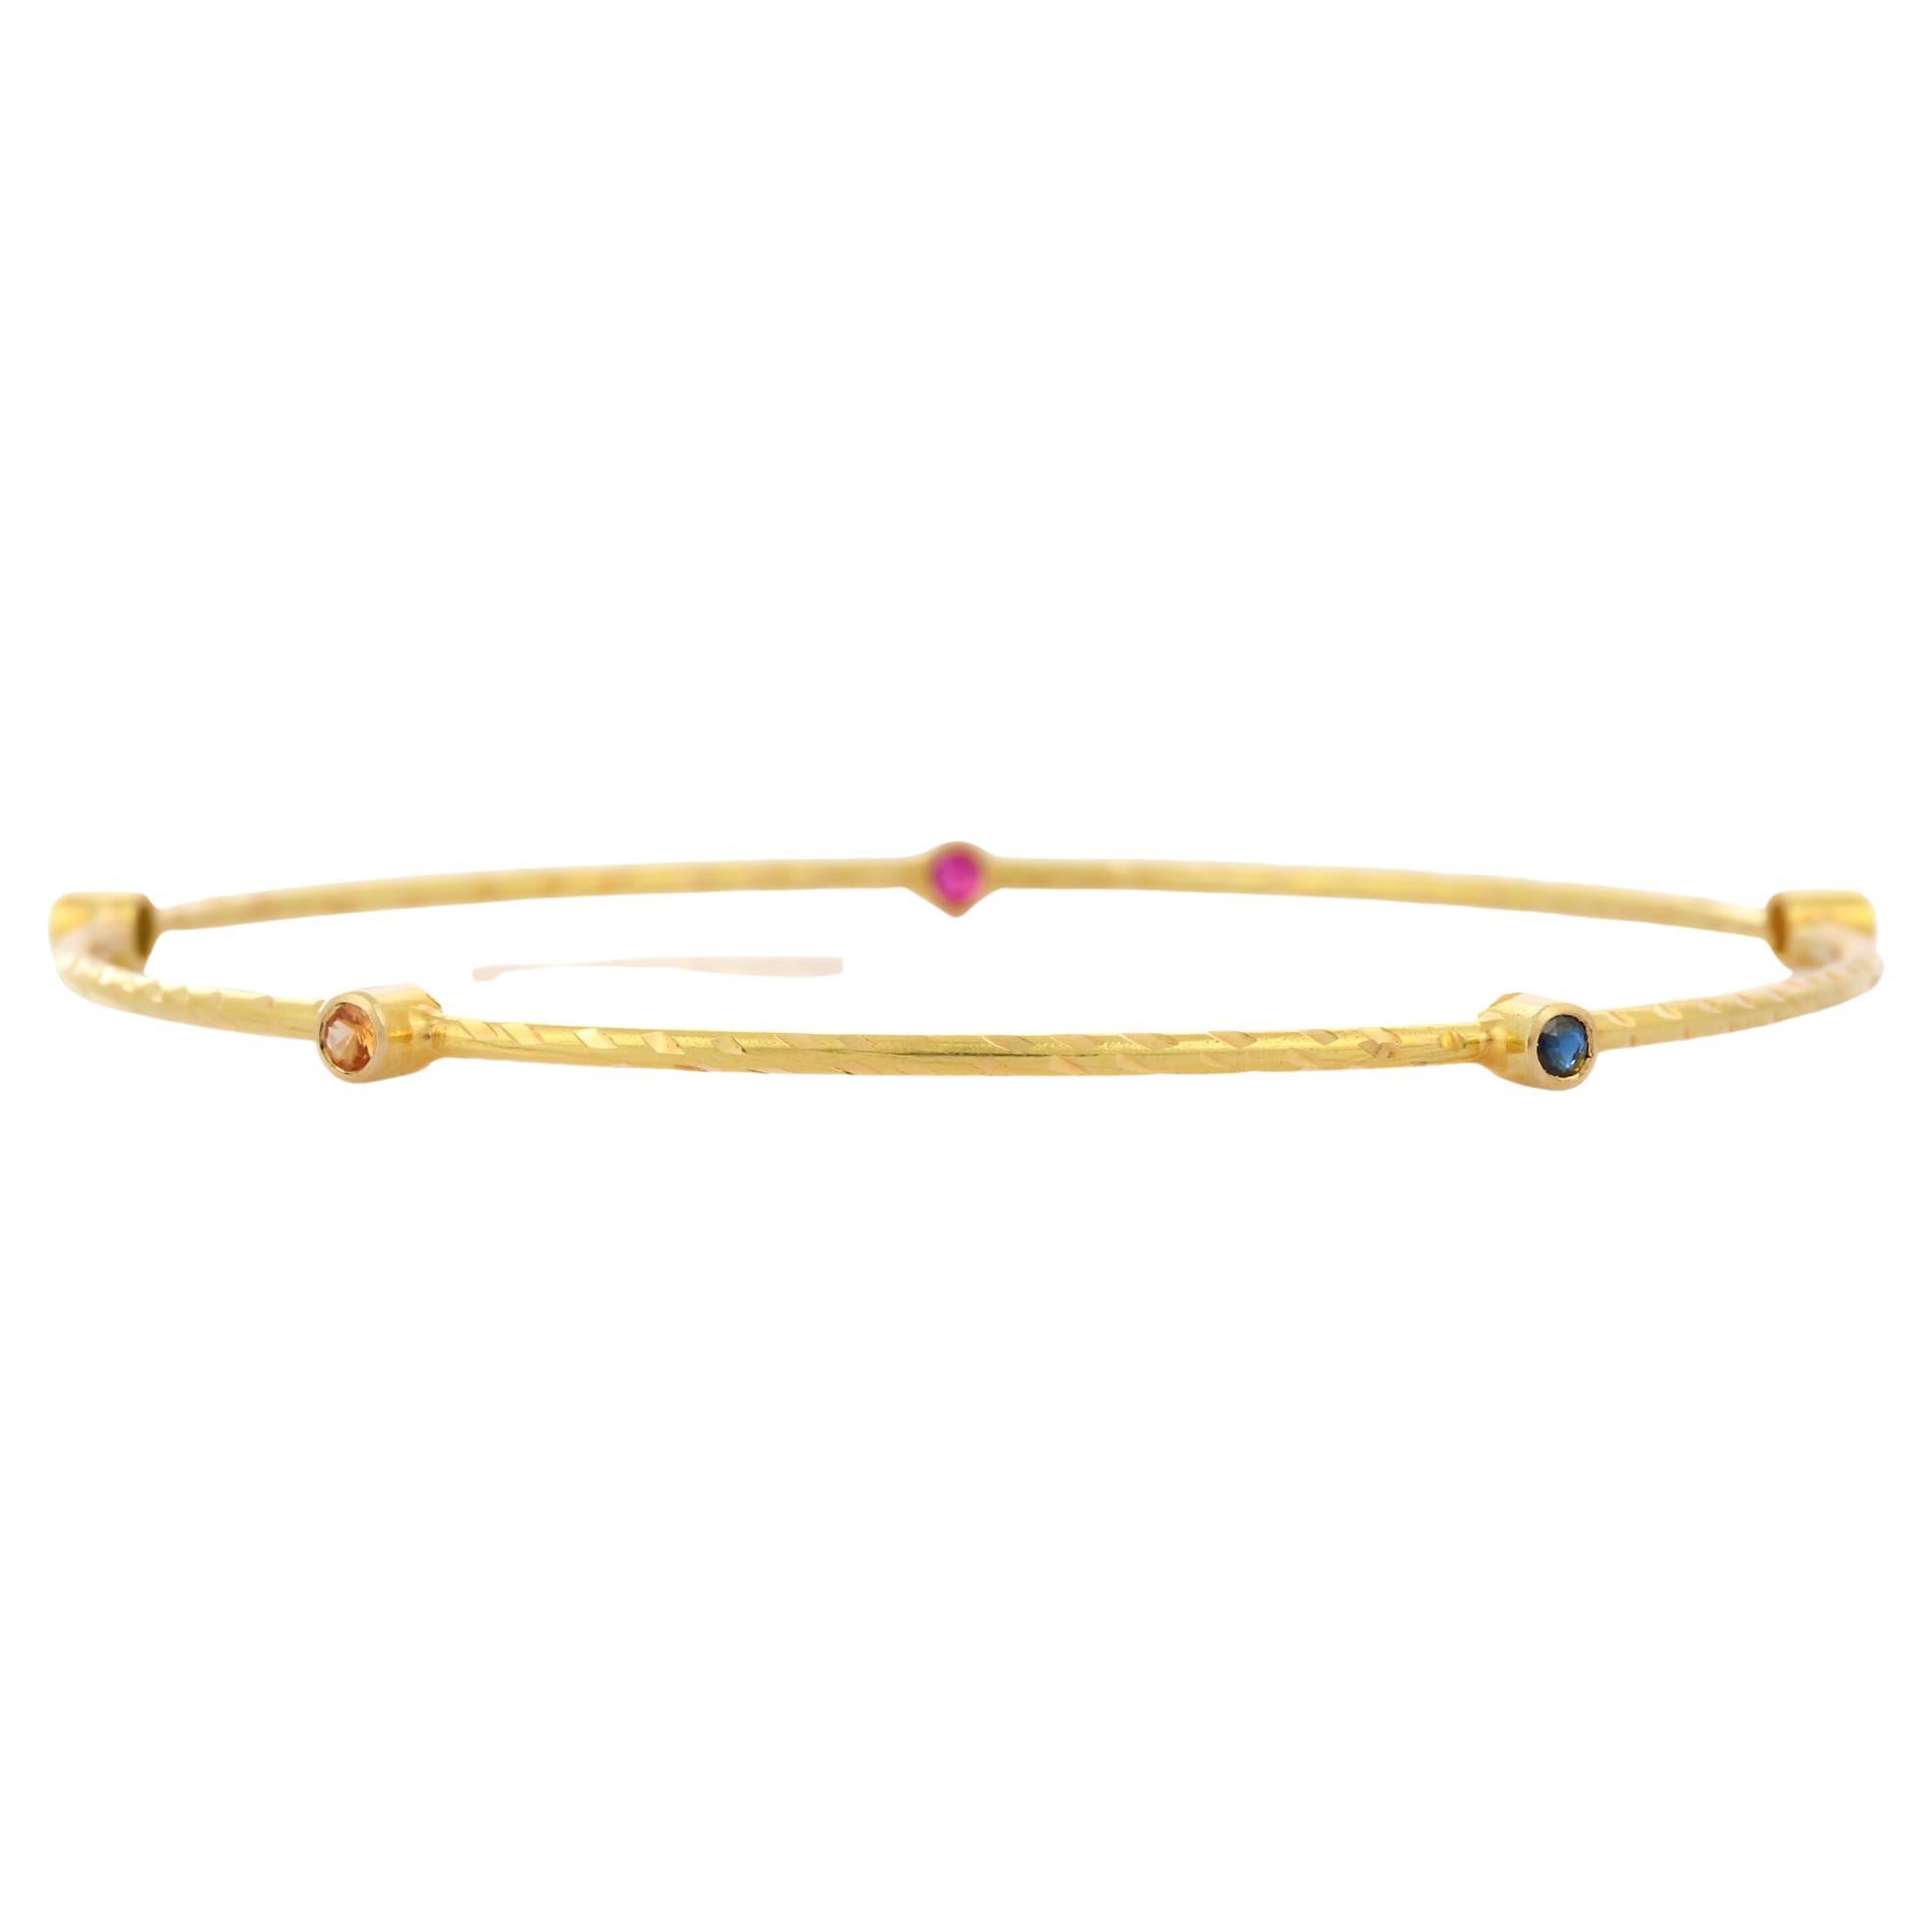 Bracelet moderne en or jaune massif 18 carats avec émeraude, rubis et saphir naturels